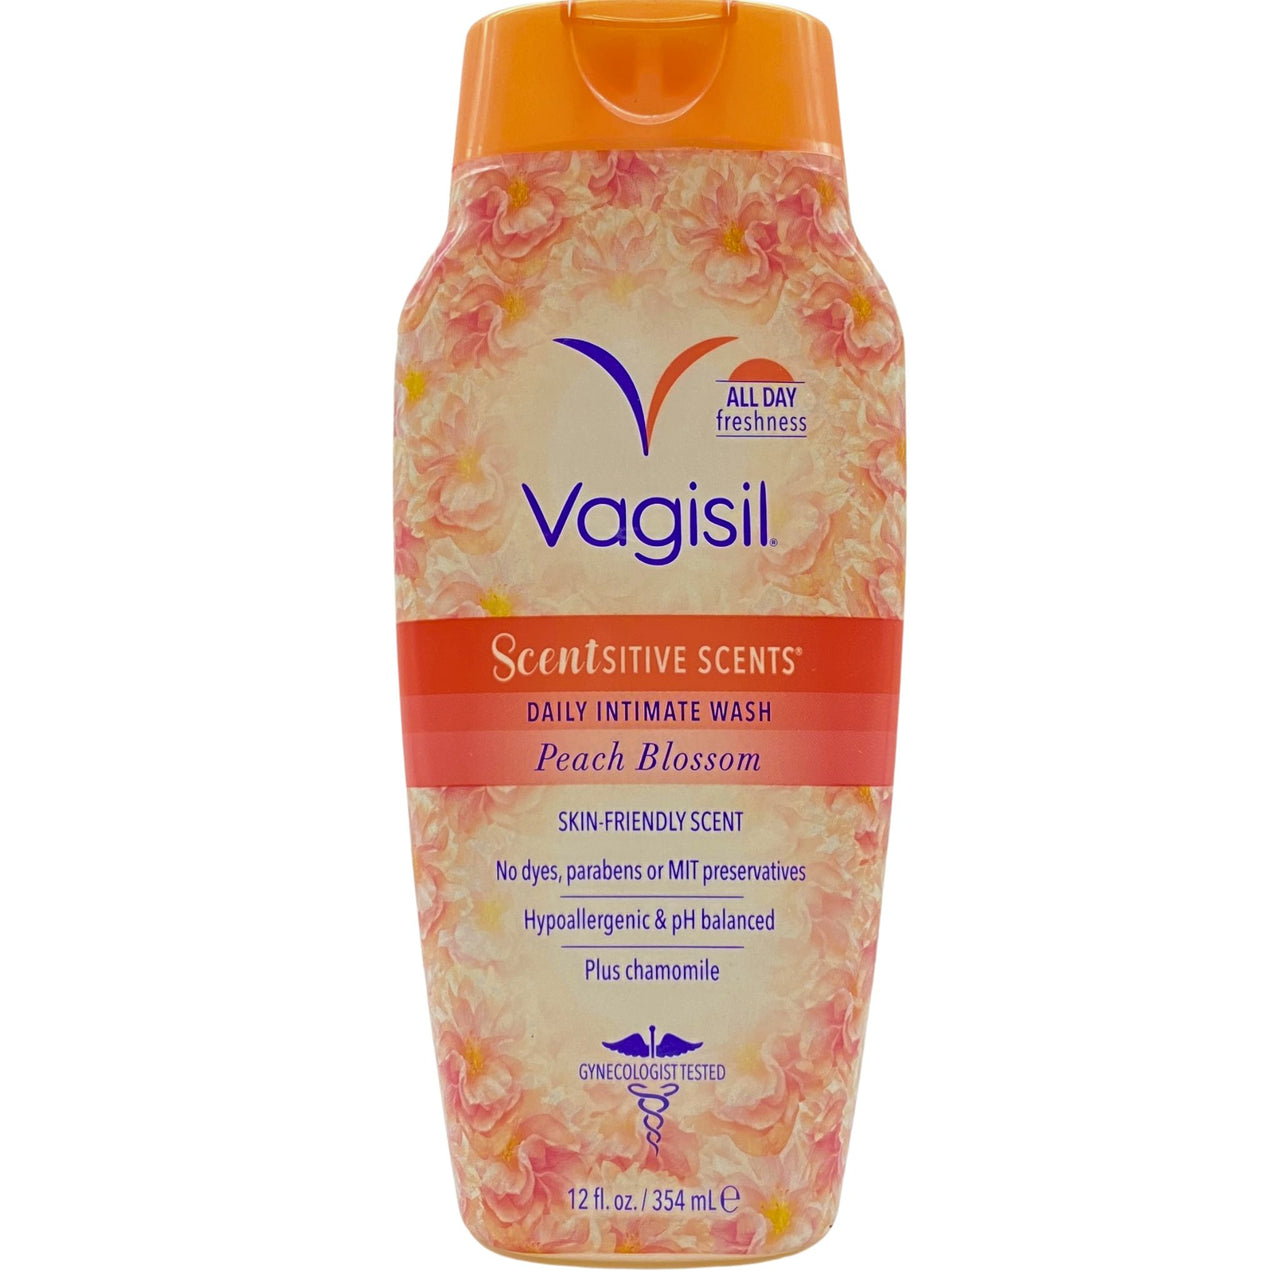 Vagisil Scentsitive Scents Daily Intimate Wash Peach Blossom